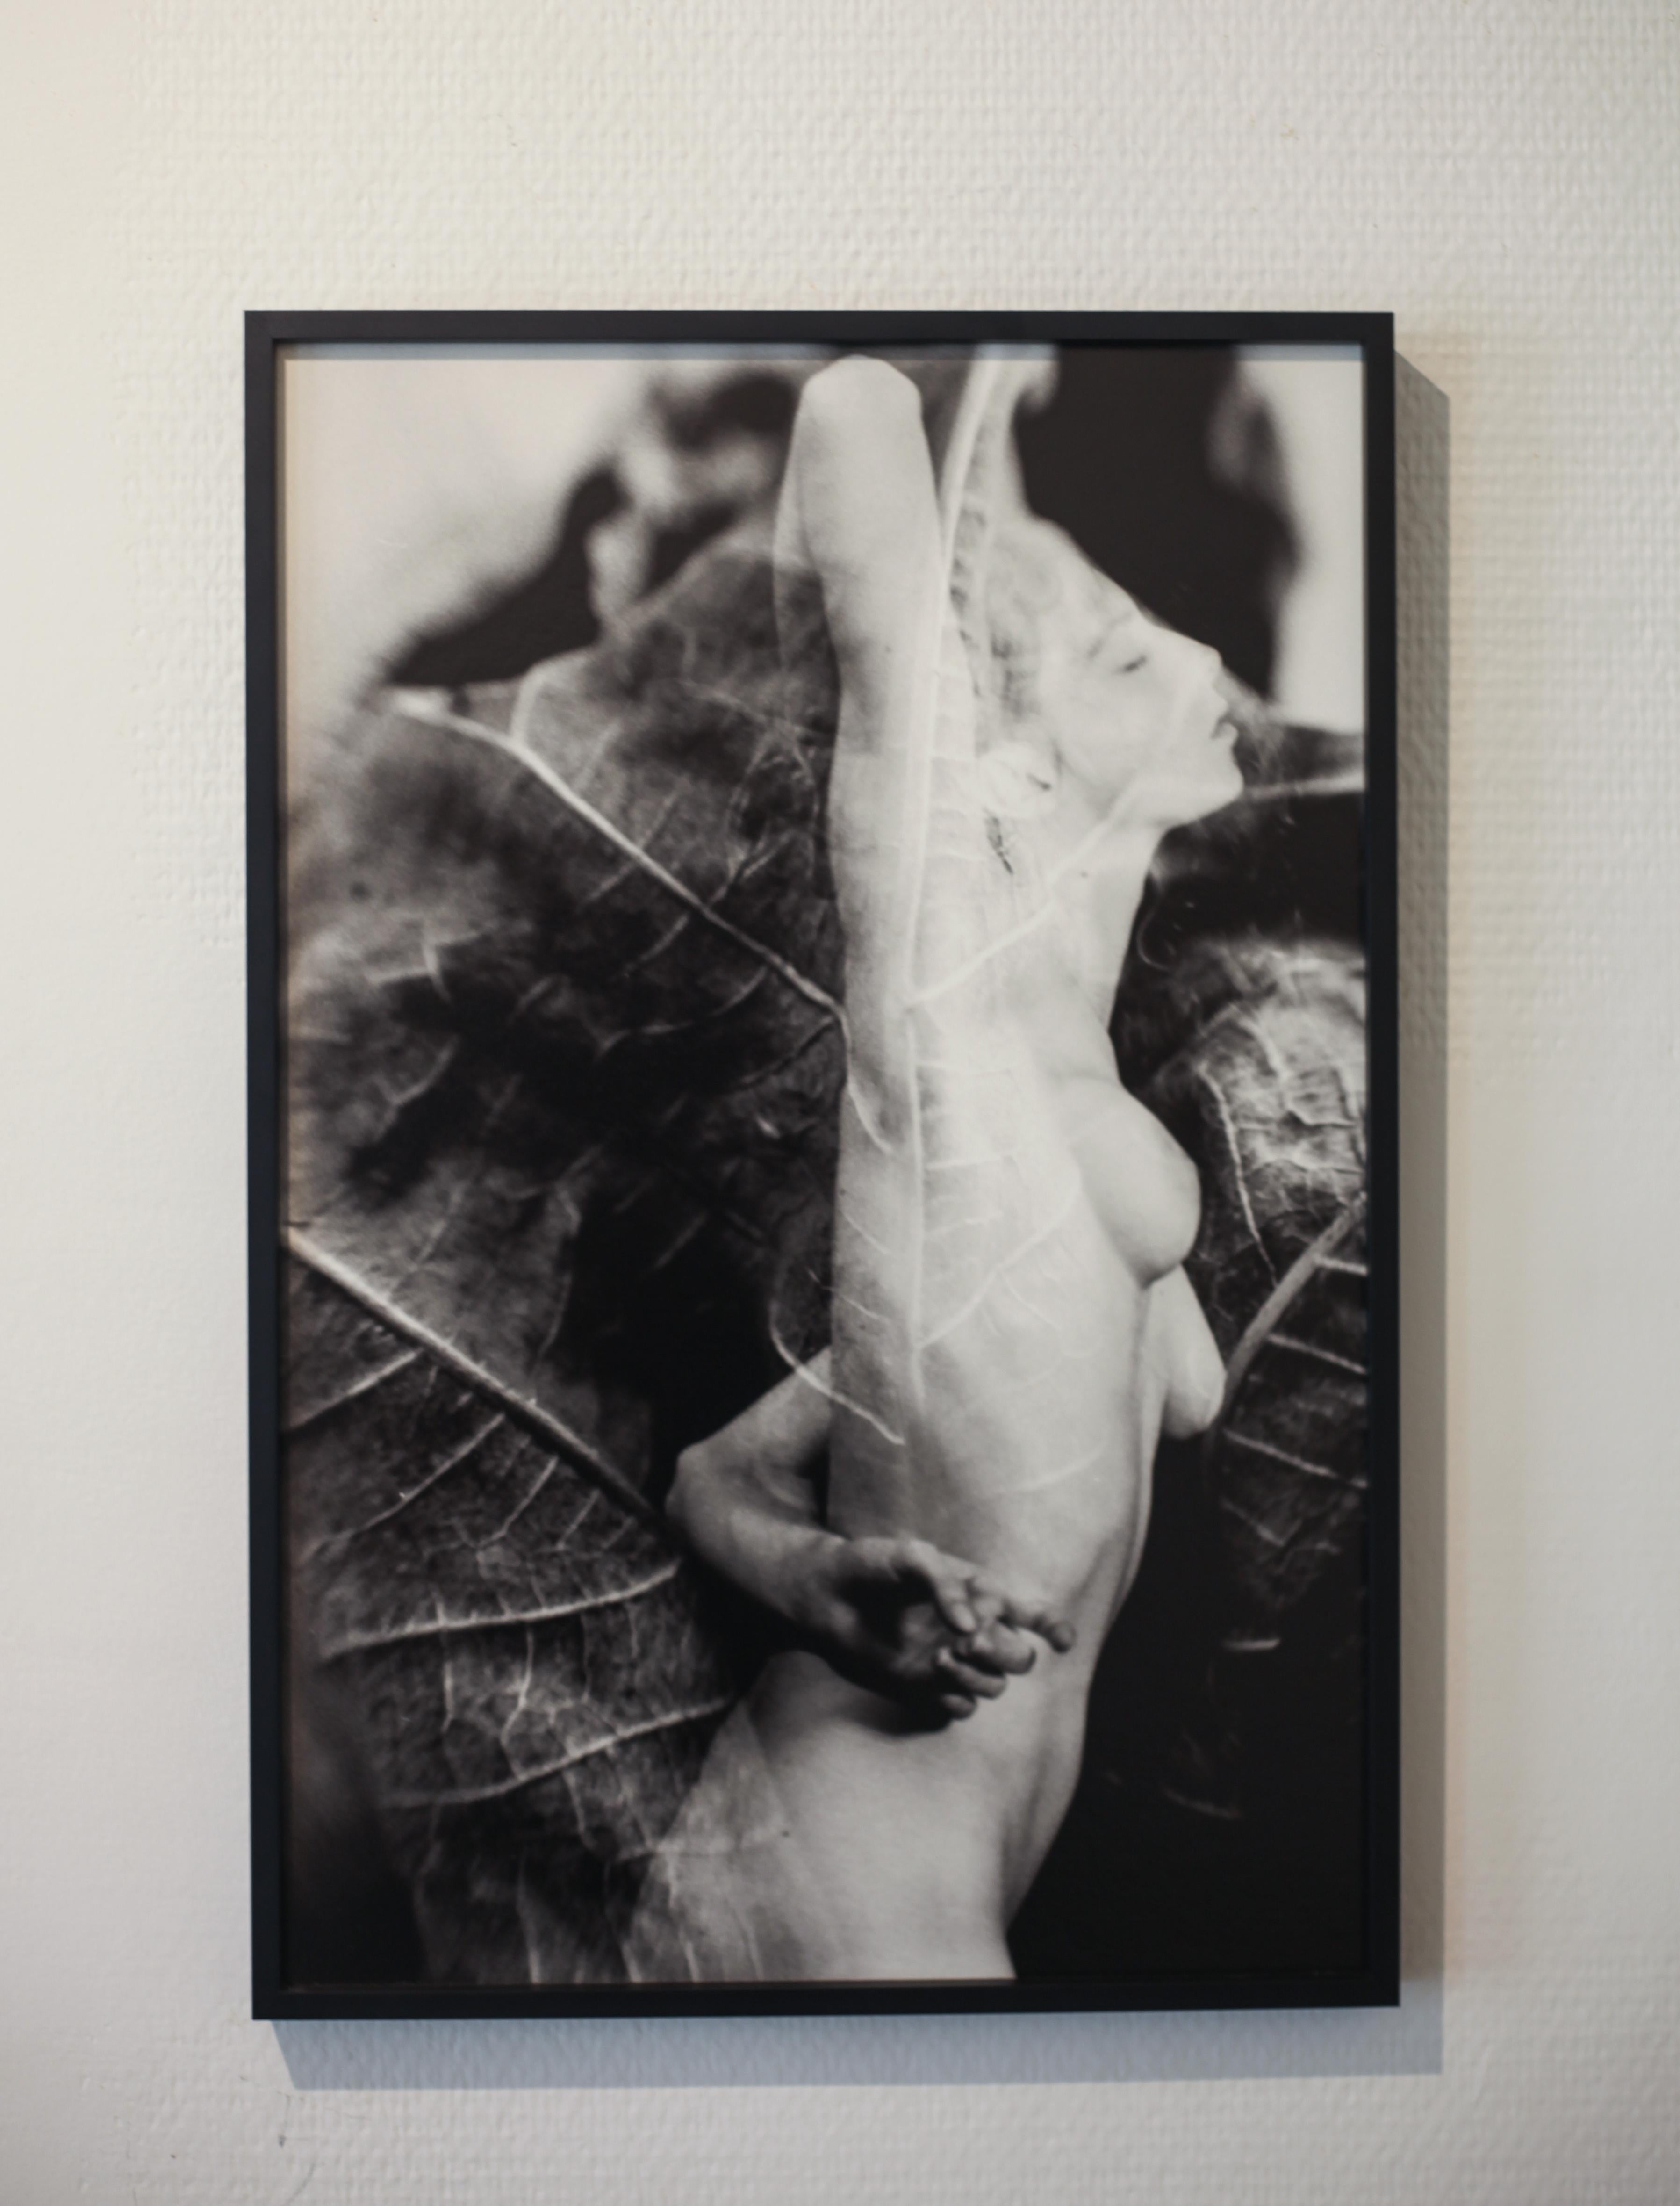 Artist : Meïdhy Bichon

- Title : Mouvements Naturels + Number

- Date : 2019

- Technique : Silver overprint (Double exposure on silver film)

- Media : Kodak Tri-X 400 film

- Dimension : 30 x 45 cm 

- Limited edition of 10 prints

- Price : 390€